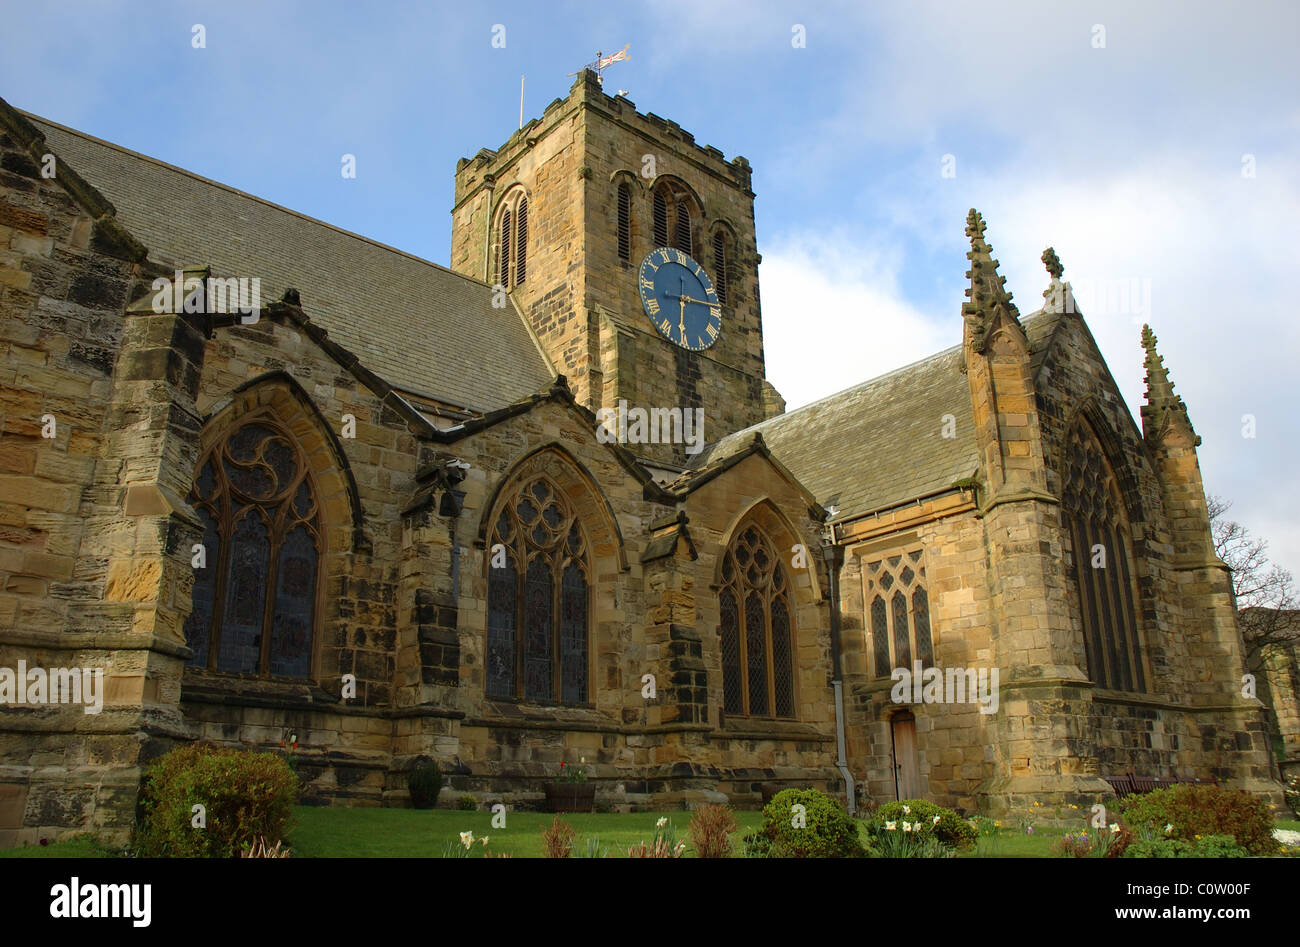 St Mary's church, Scarborough, North Yorkshire, England, UK Stock Photo